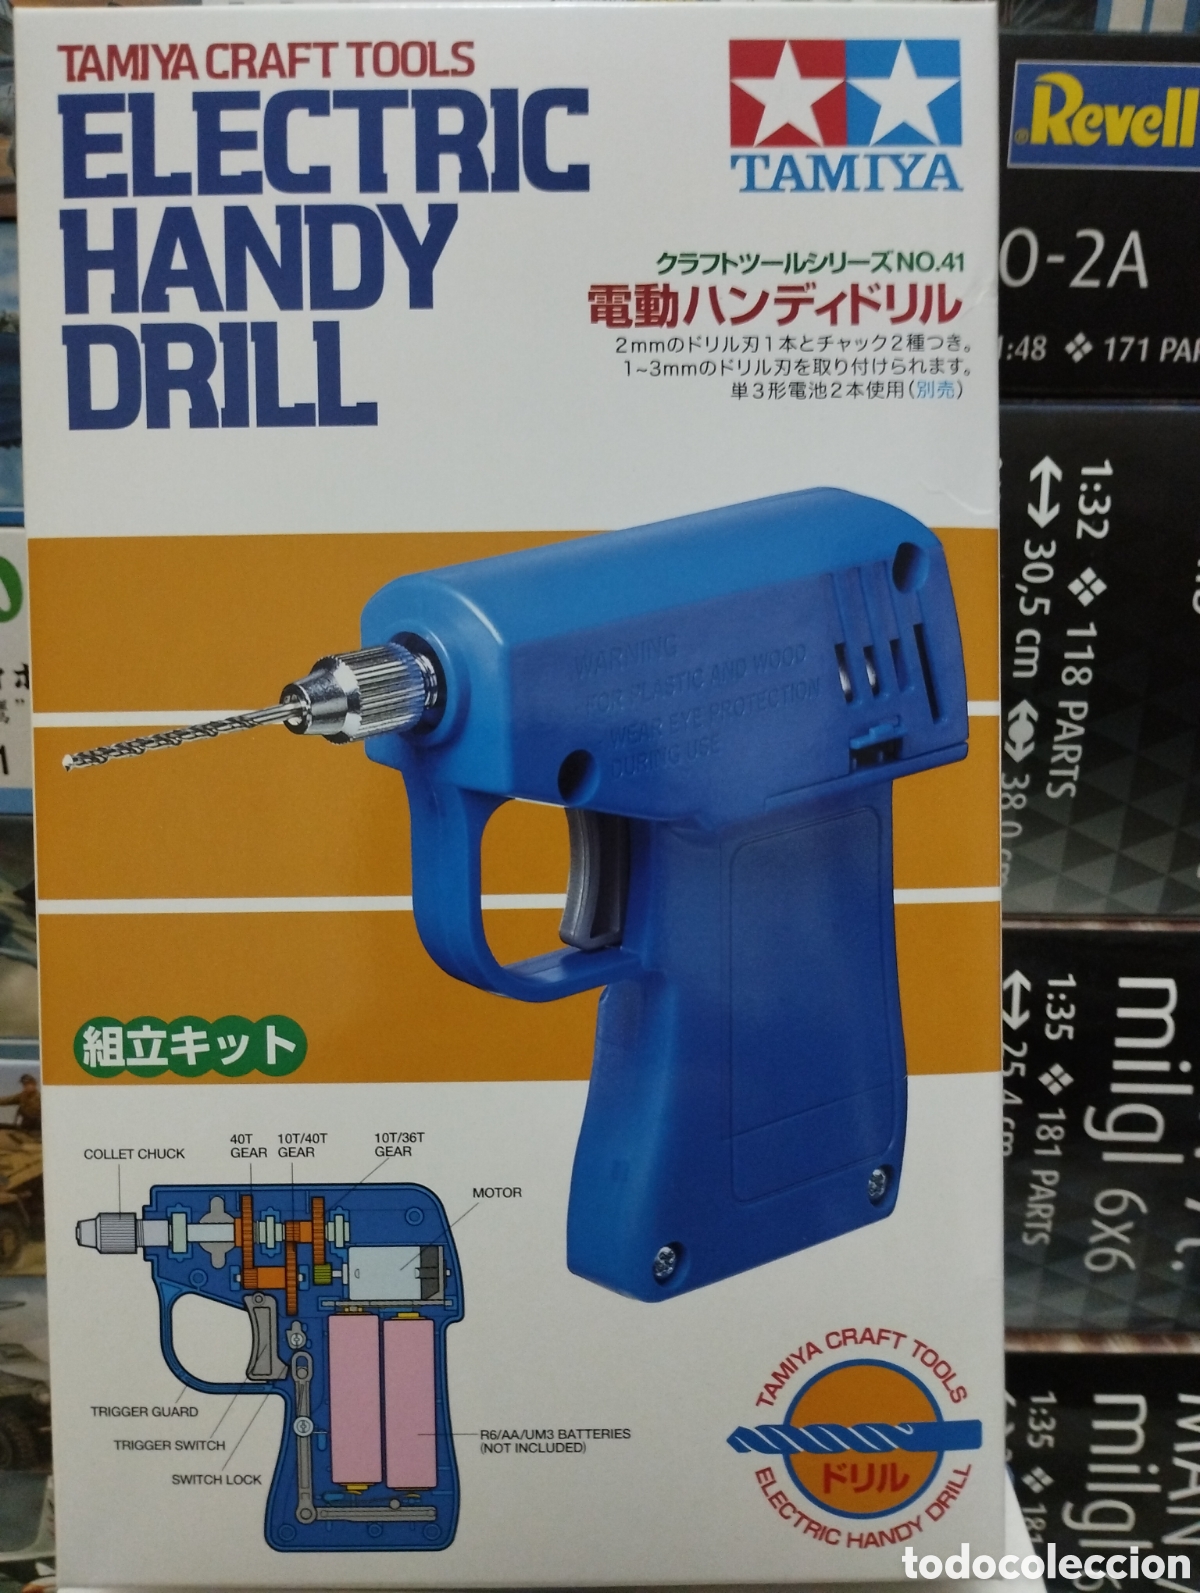 Tamiya 74041 - Electric Handy Drill